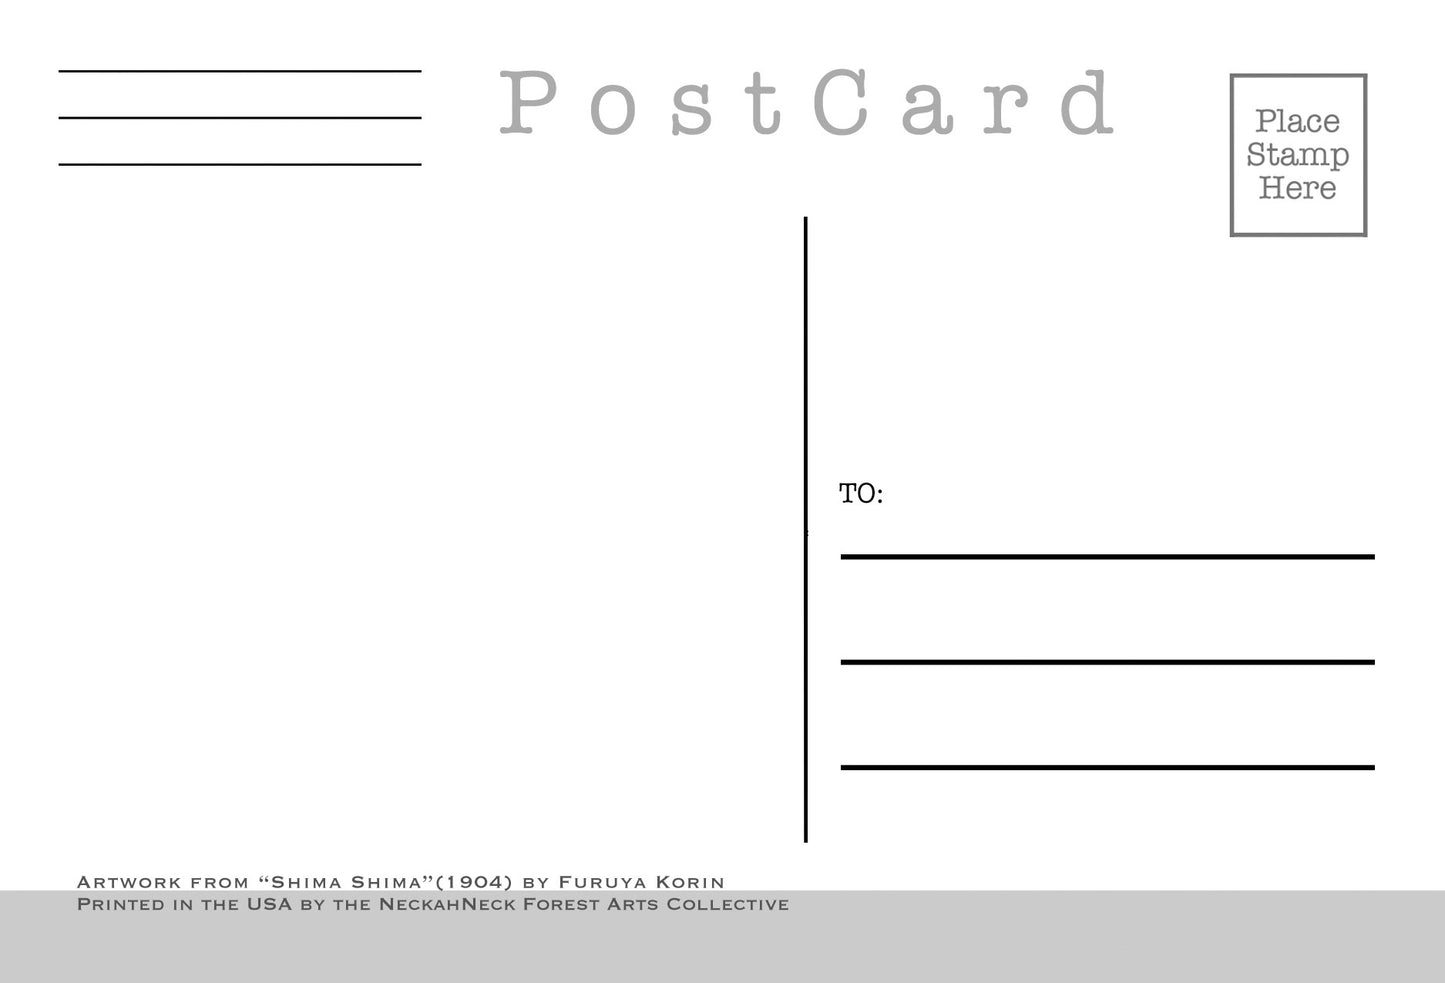 Pattern Postcard Set (1) - Set of 25 Artist Postcards - Shima Shima - Art Deco art -Scrapbooking - Vintage - wall art